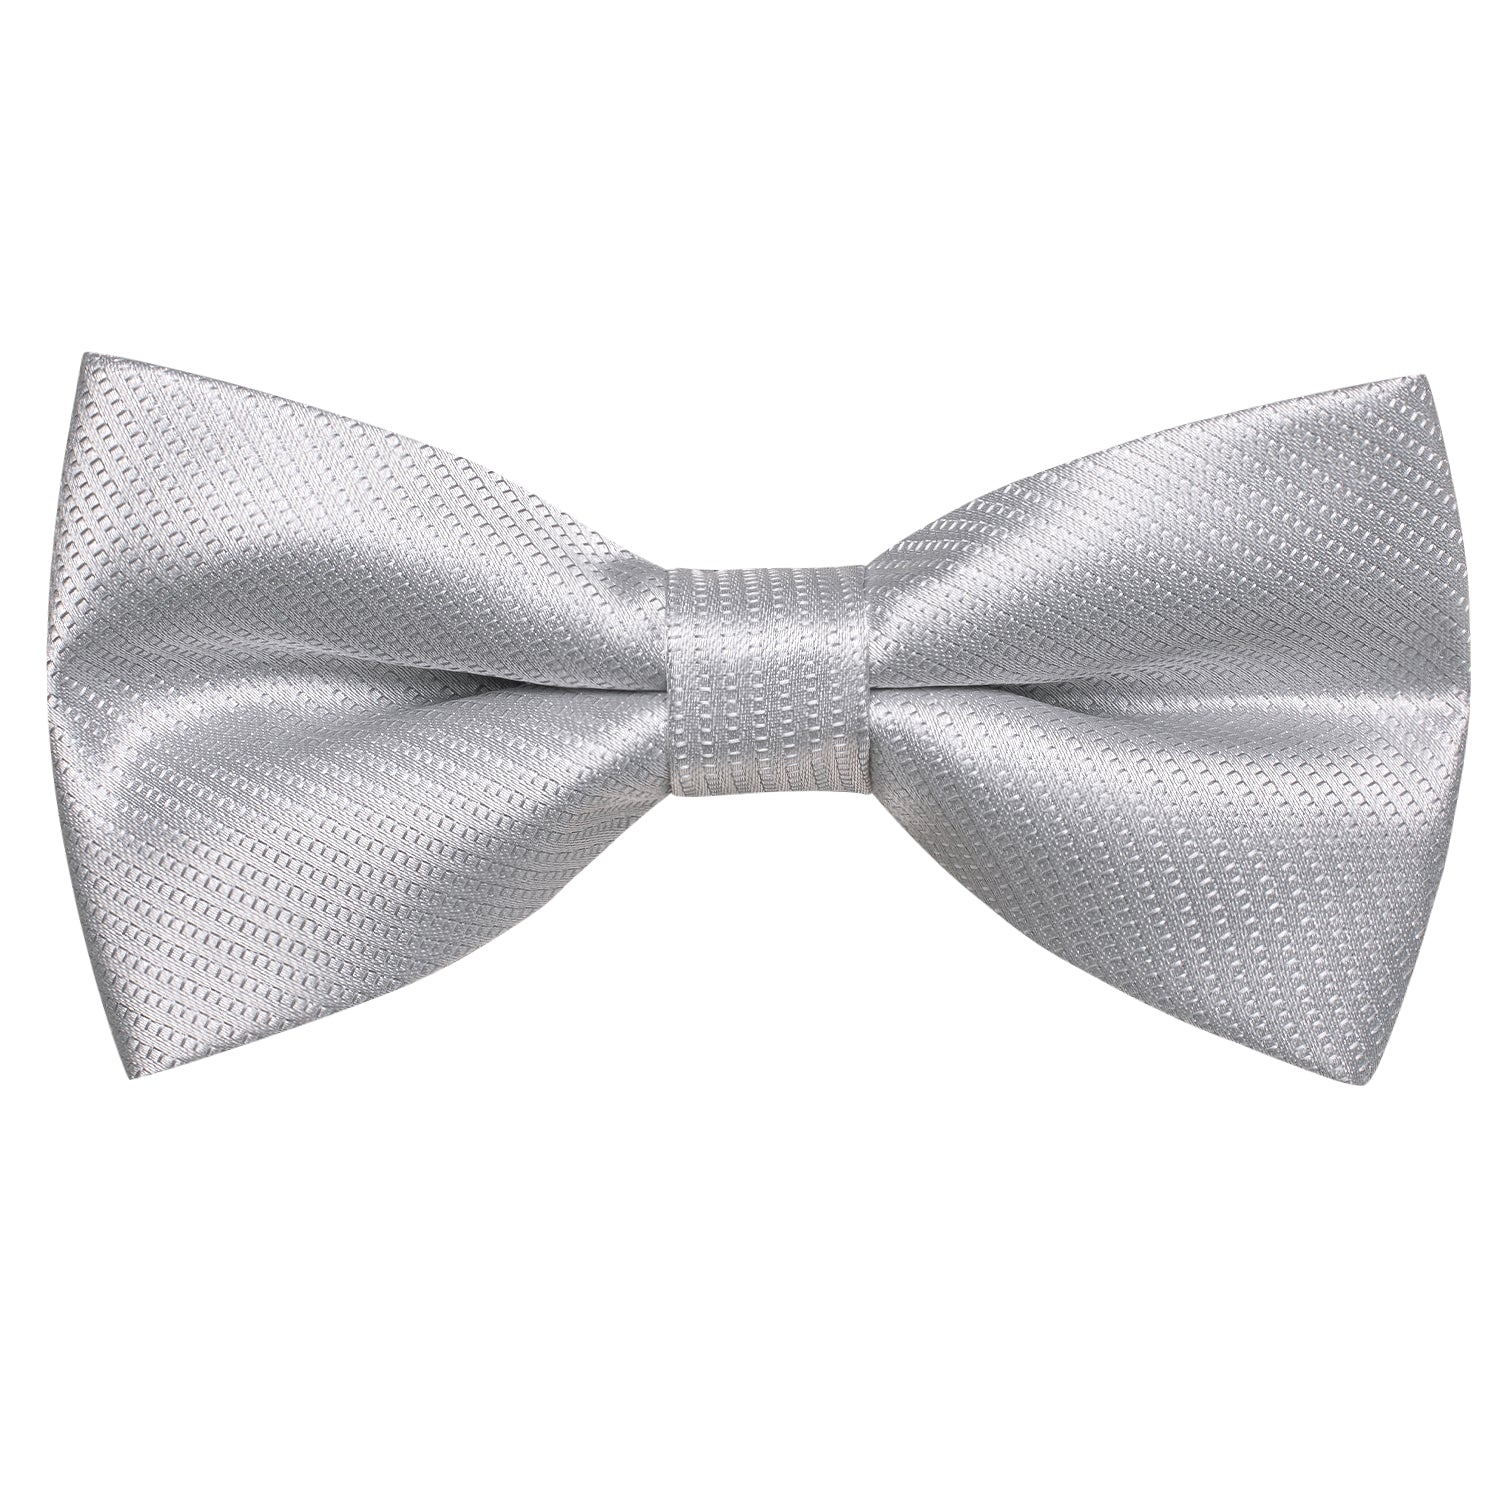 Silver Striped Pre-tied Bow Tie Hanky Cufflinks Set